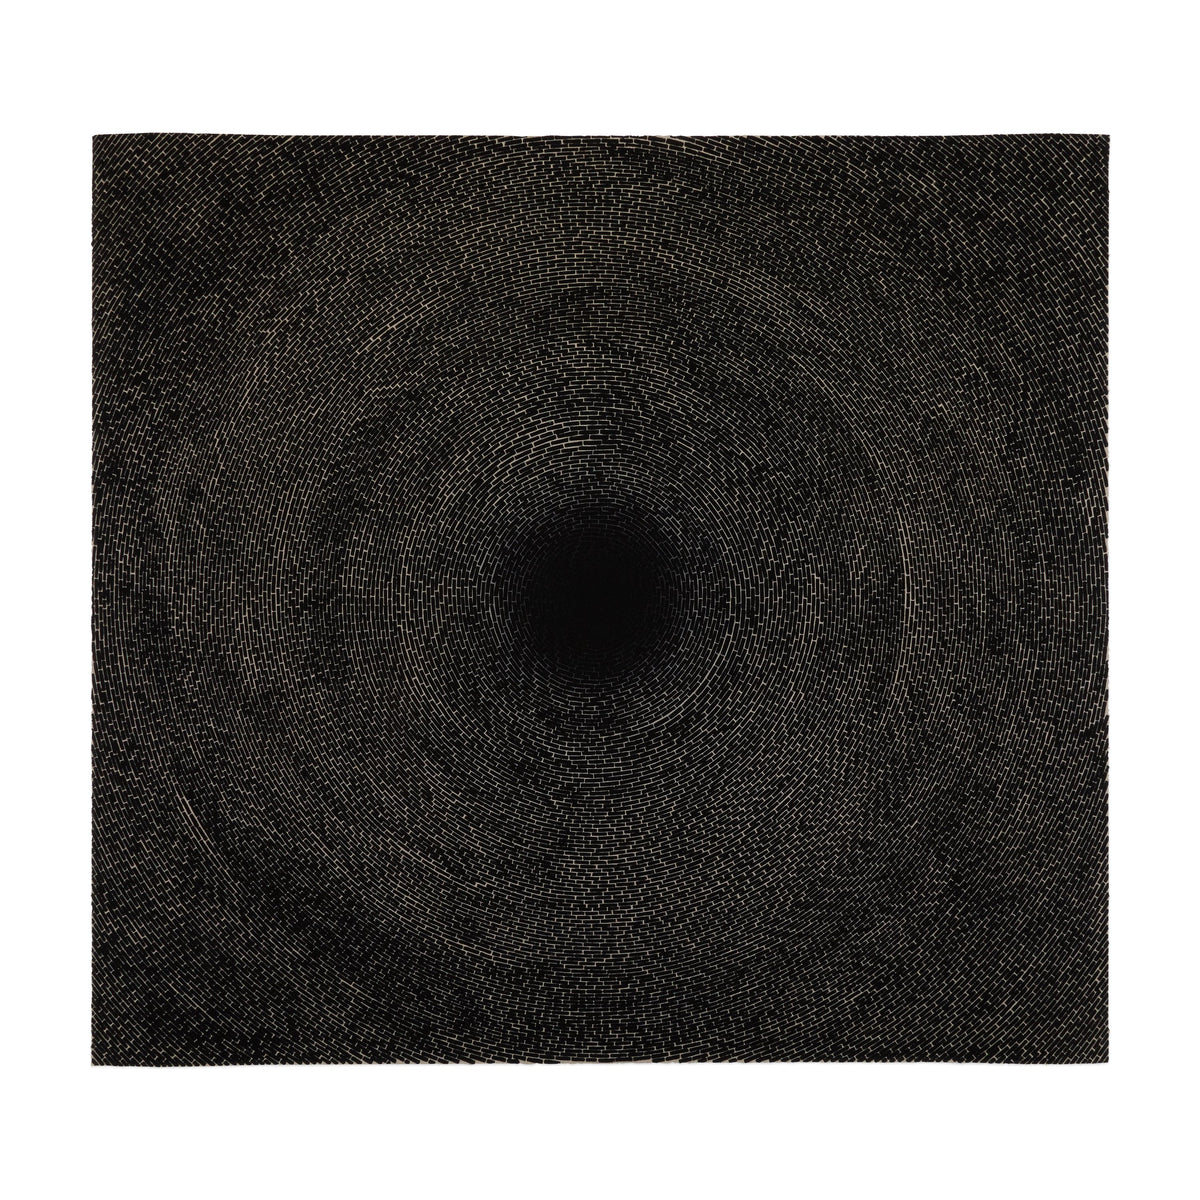 Y.Z. Kami: Black Dome print